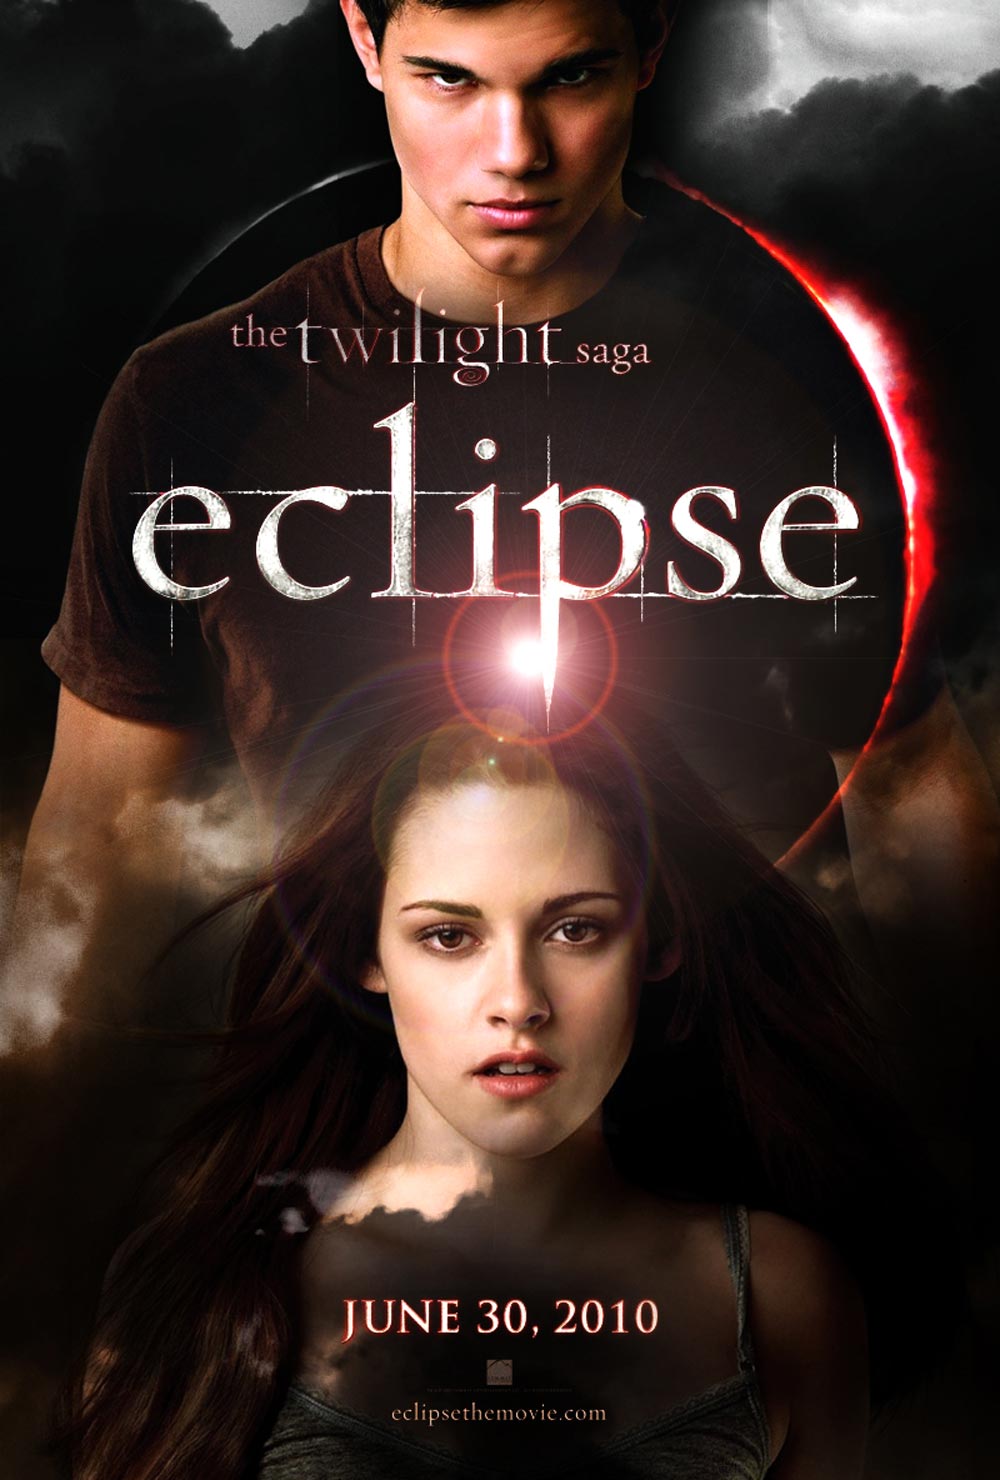 The Twilight Saga: Eclipse | Review St. Louis